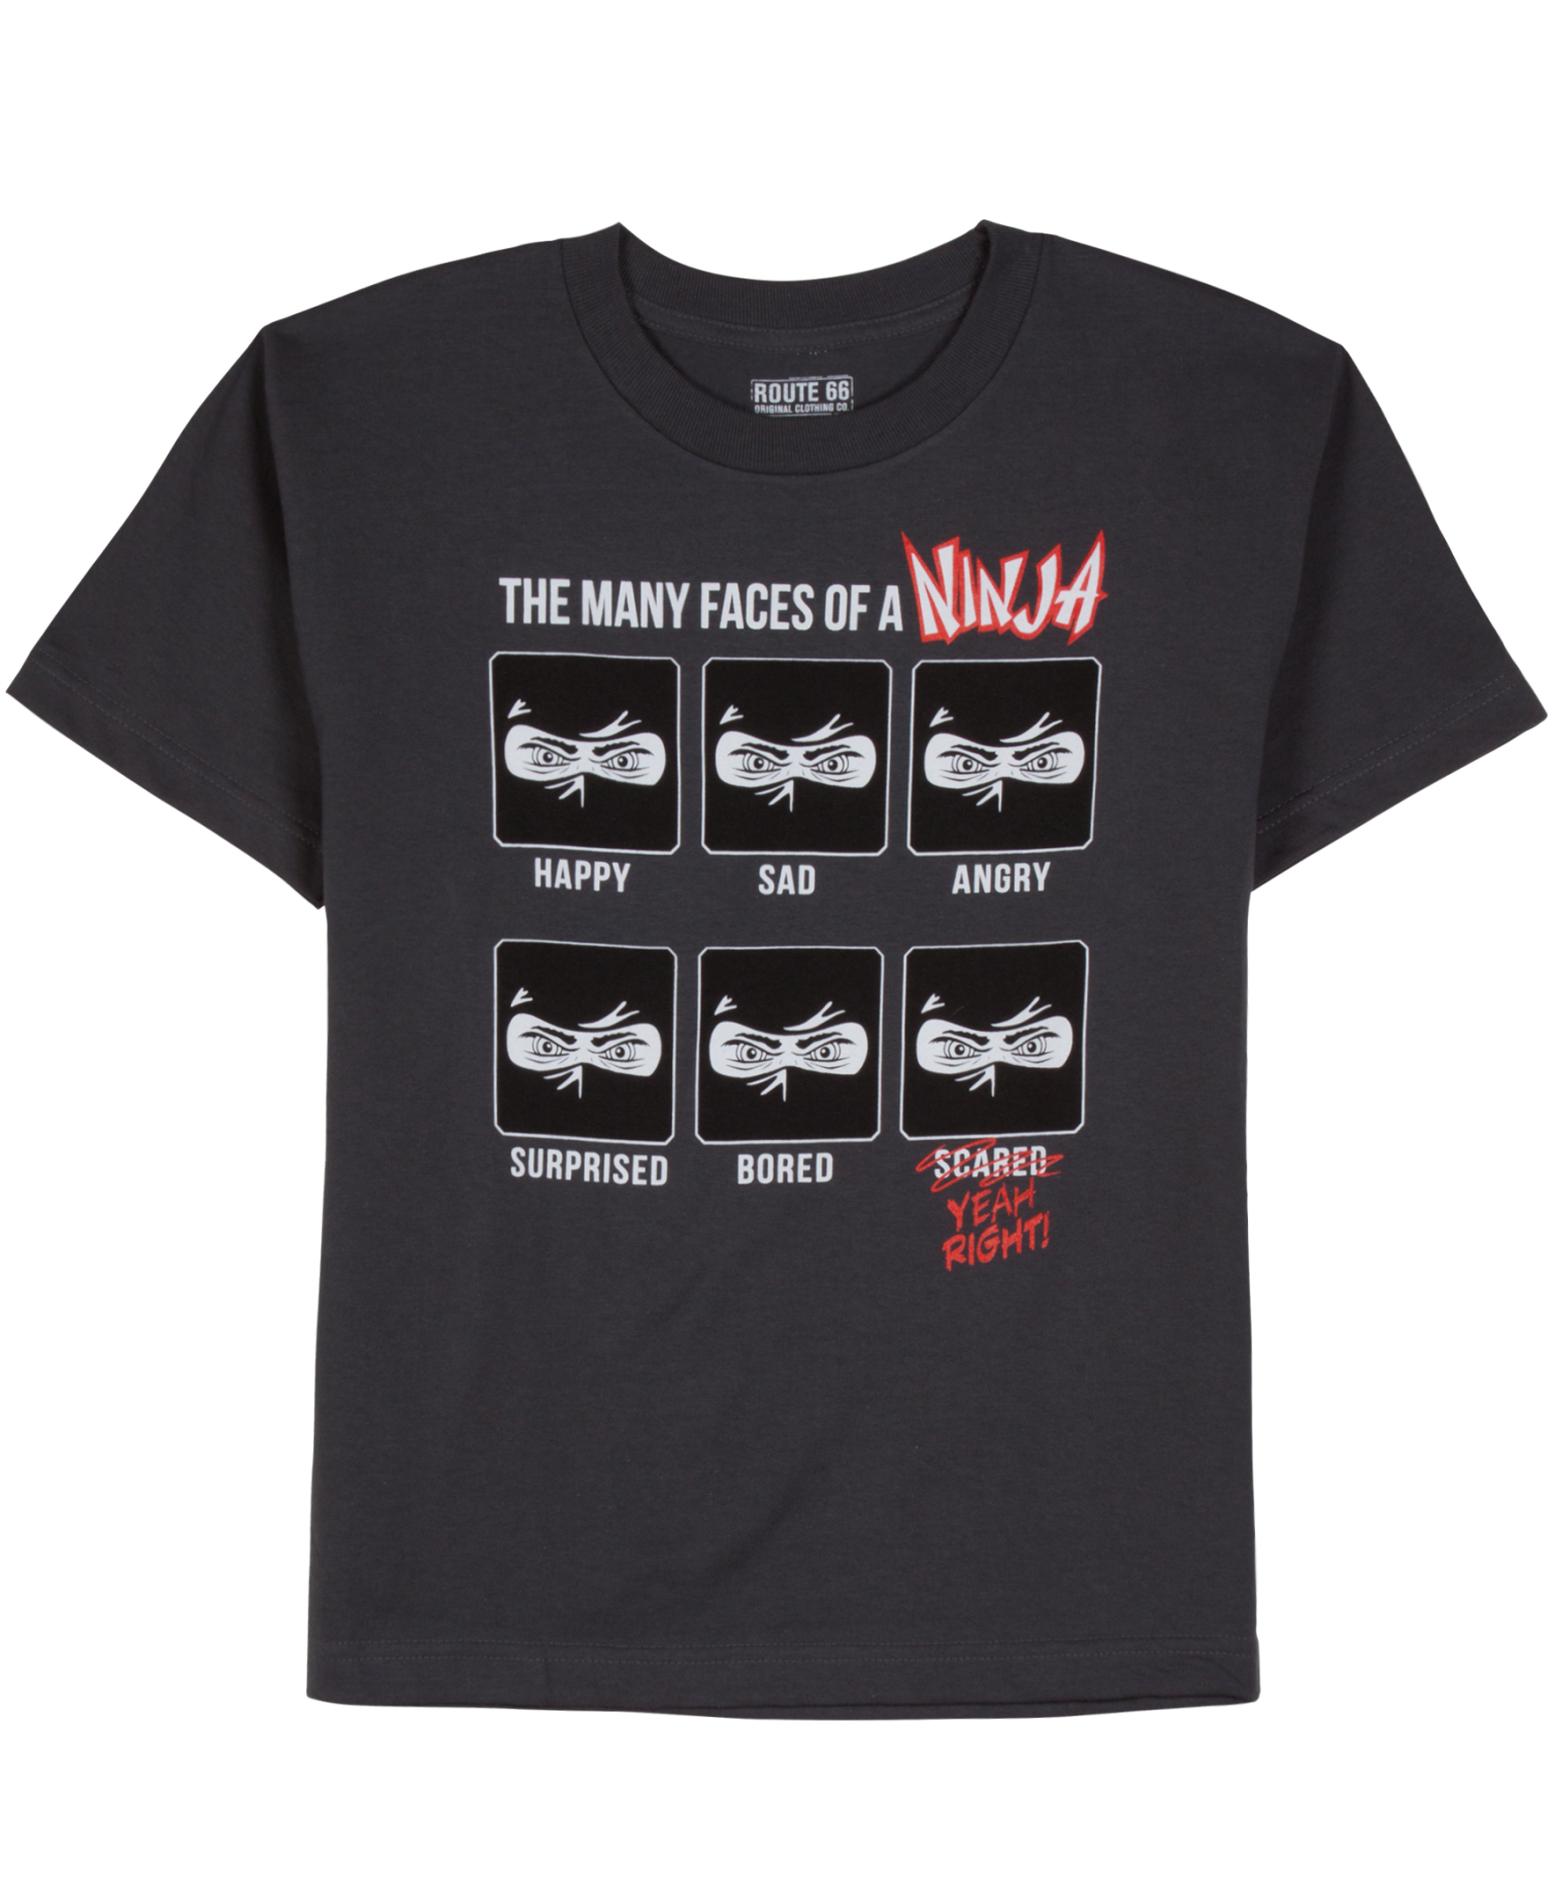 Route 66 Boy's Graphic T-Shirt - Ninja Faces